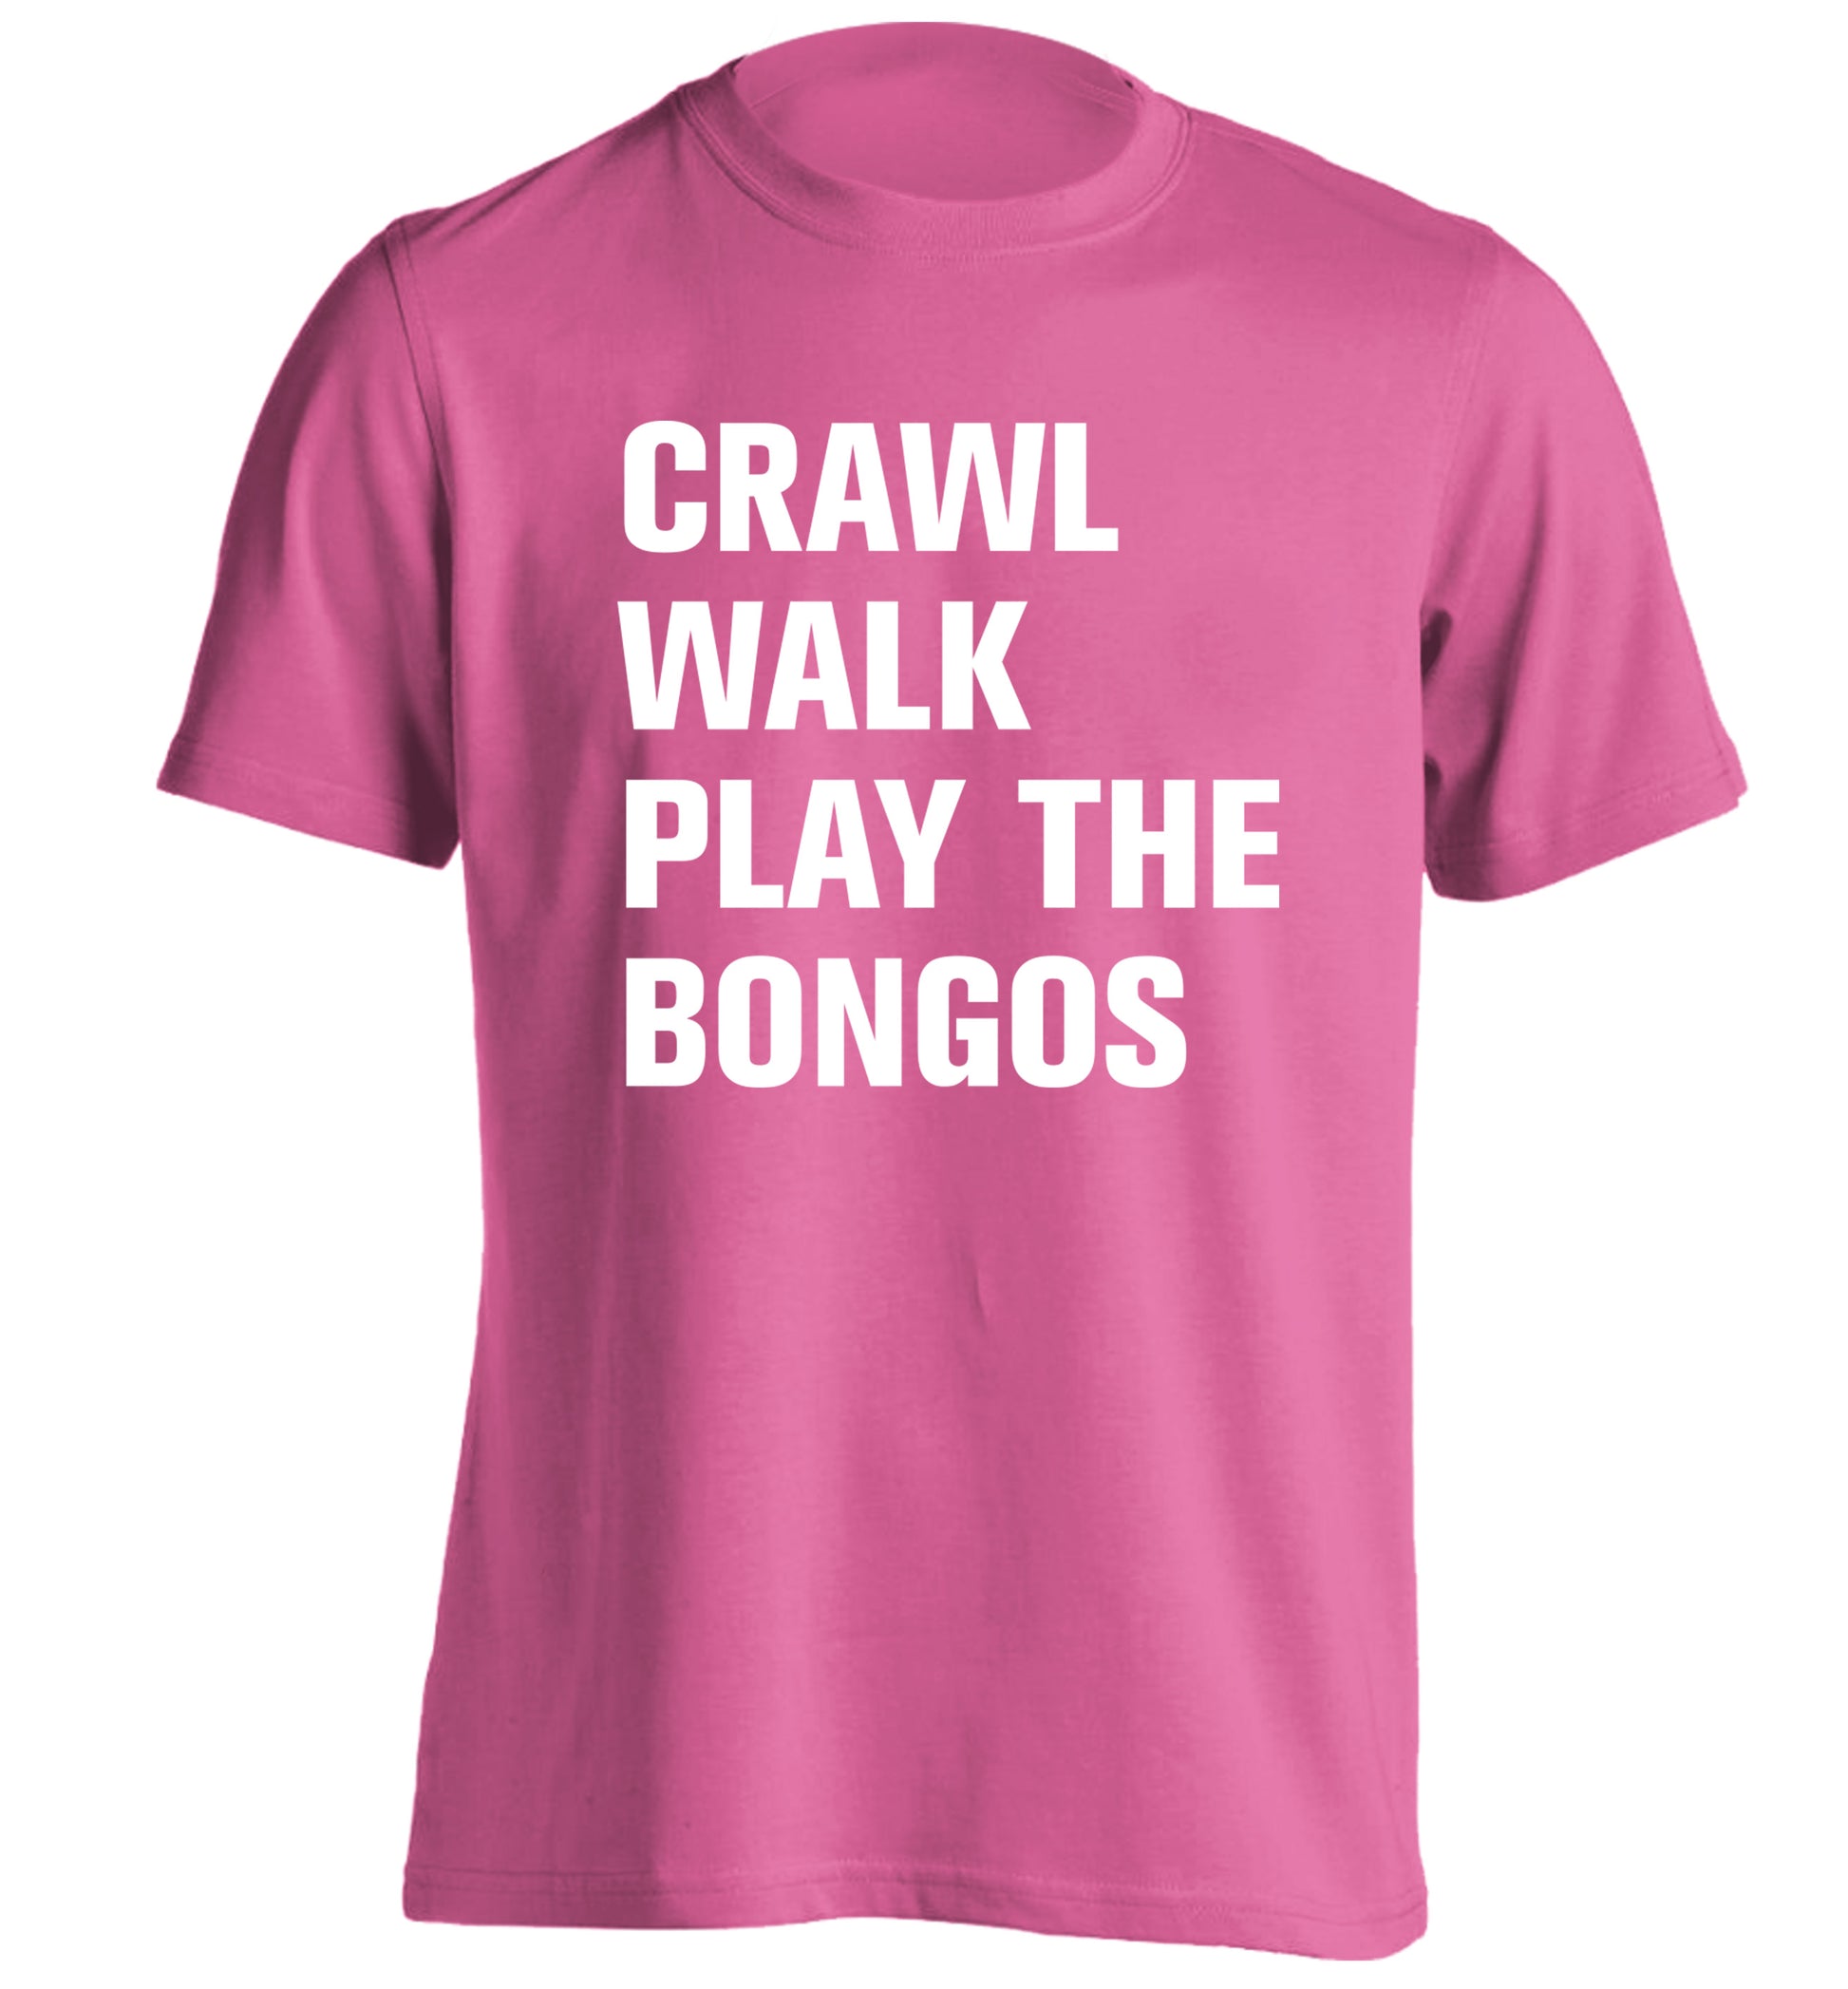 Crawl Walk Play Bongos adults unisex pink Tshirt 2XL